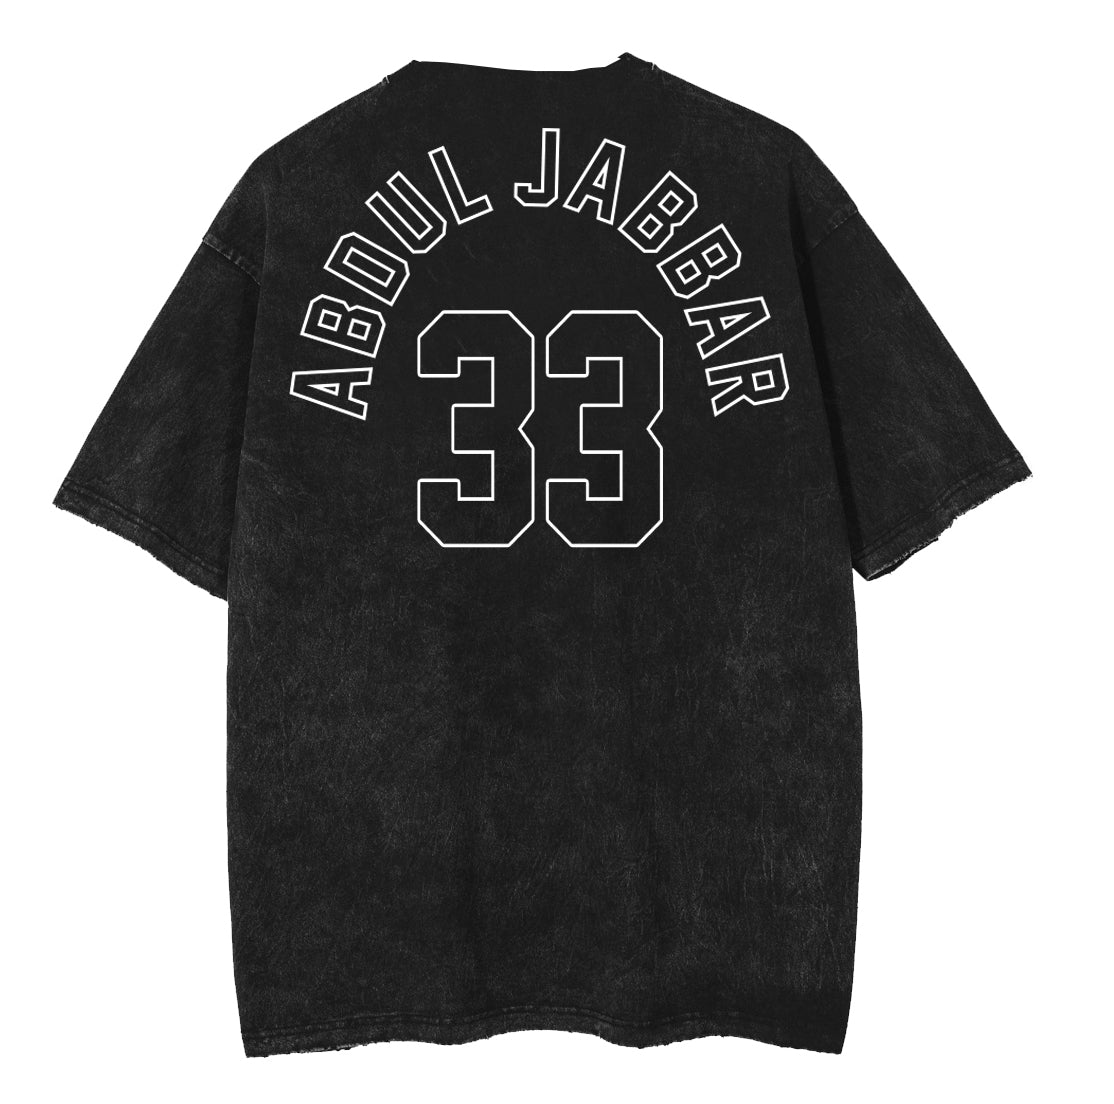 Abdul Jabbar 33 Los Angeles Lakers Basketball Jersey Sz XL